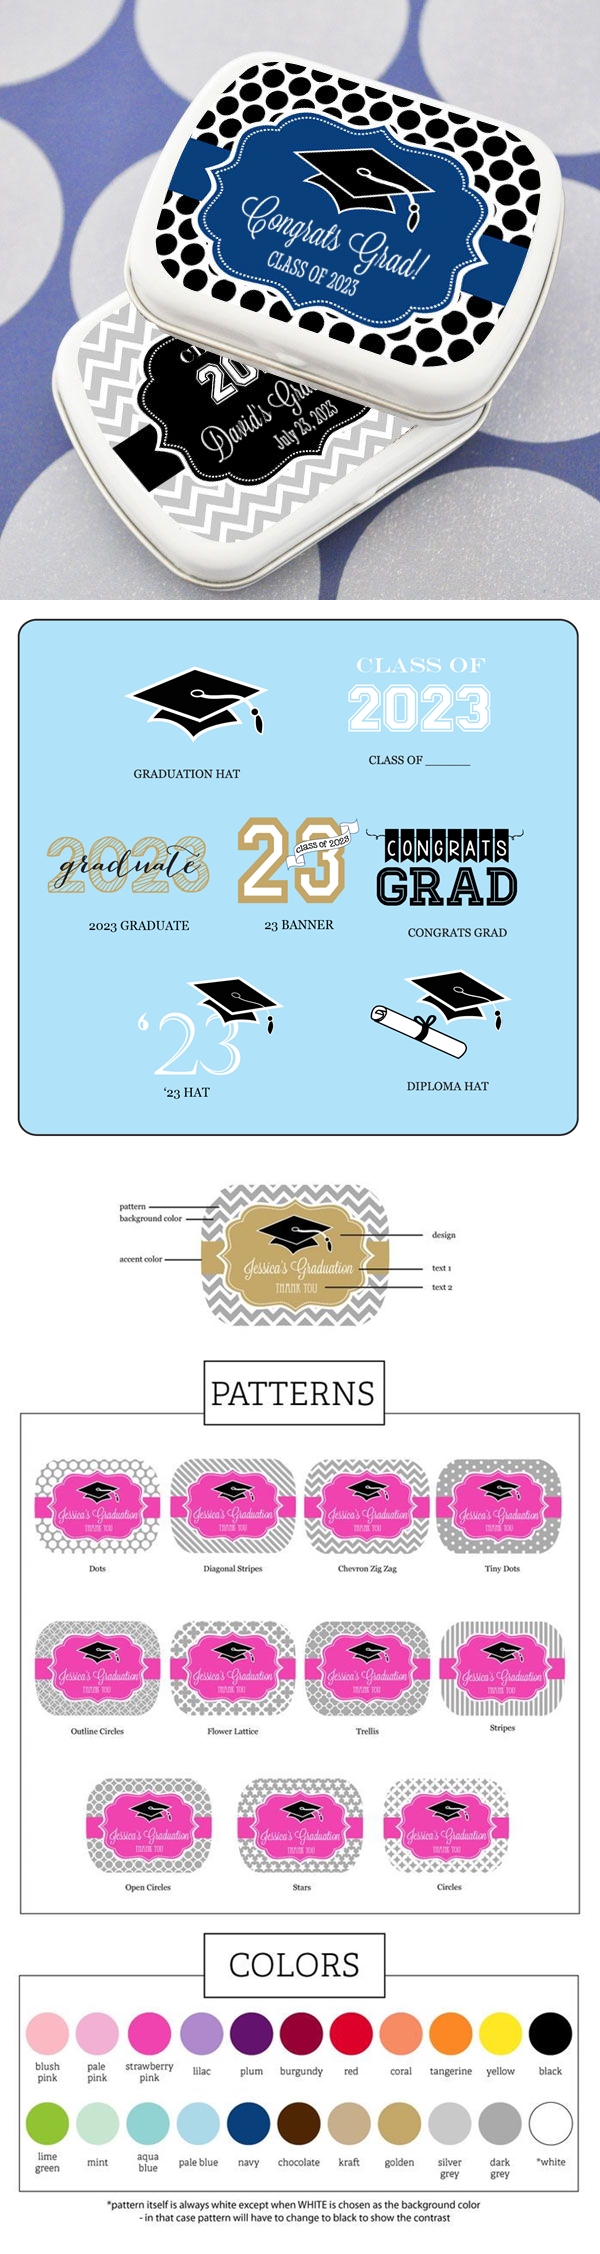 Event Blossom Marking a Milestone Personalized Graduation Mint Tins